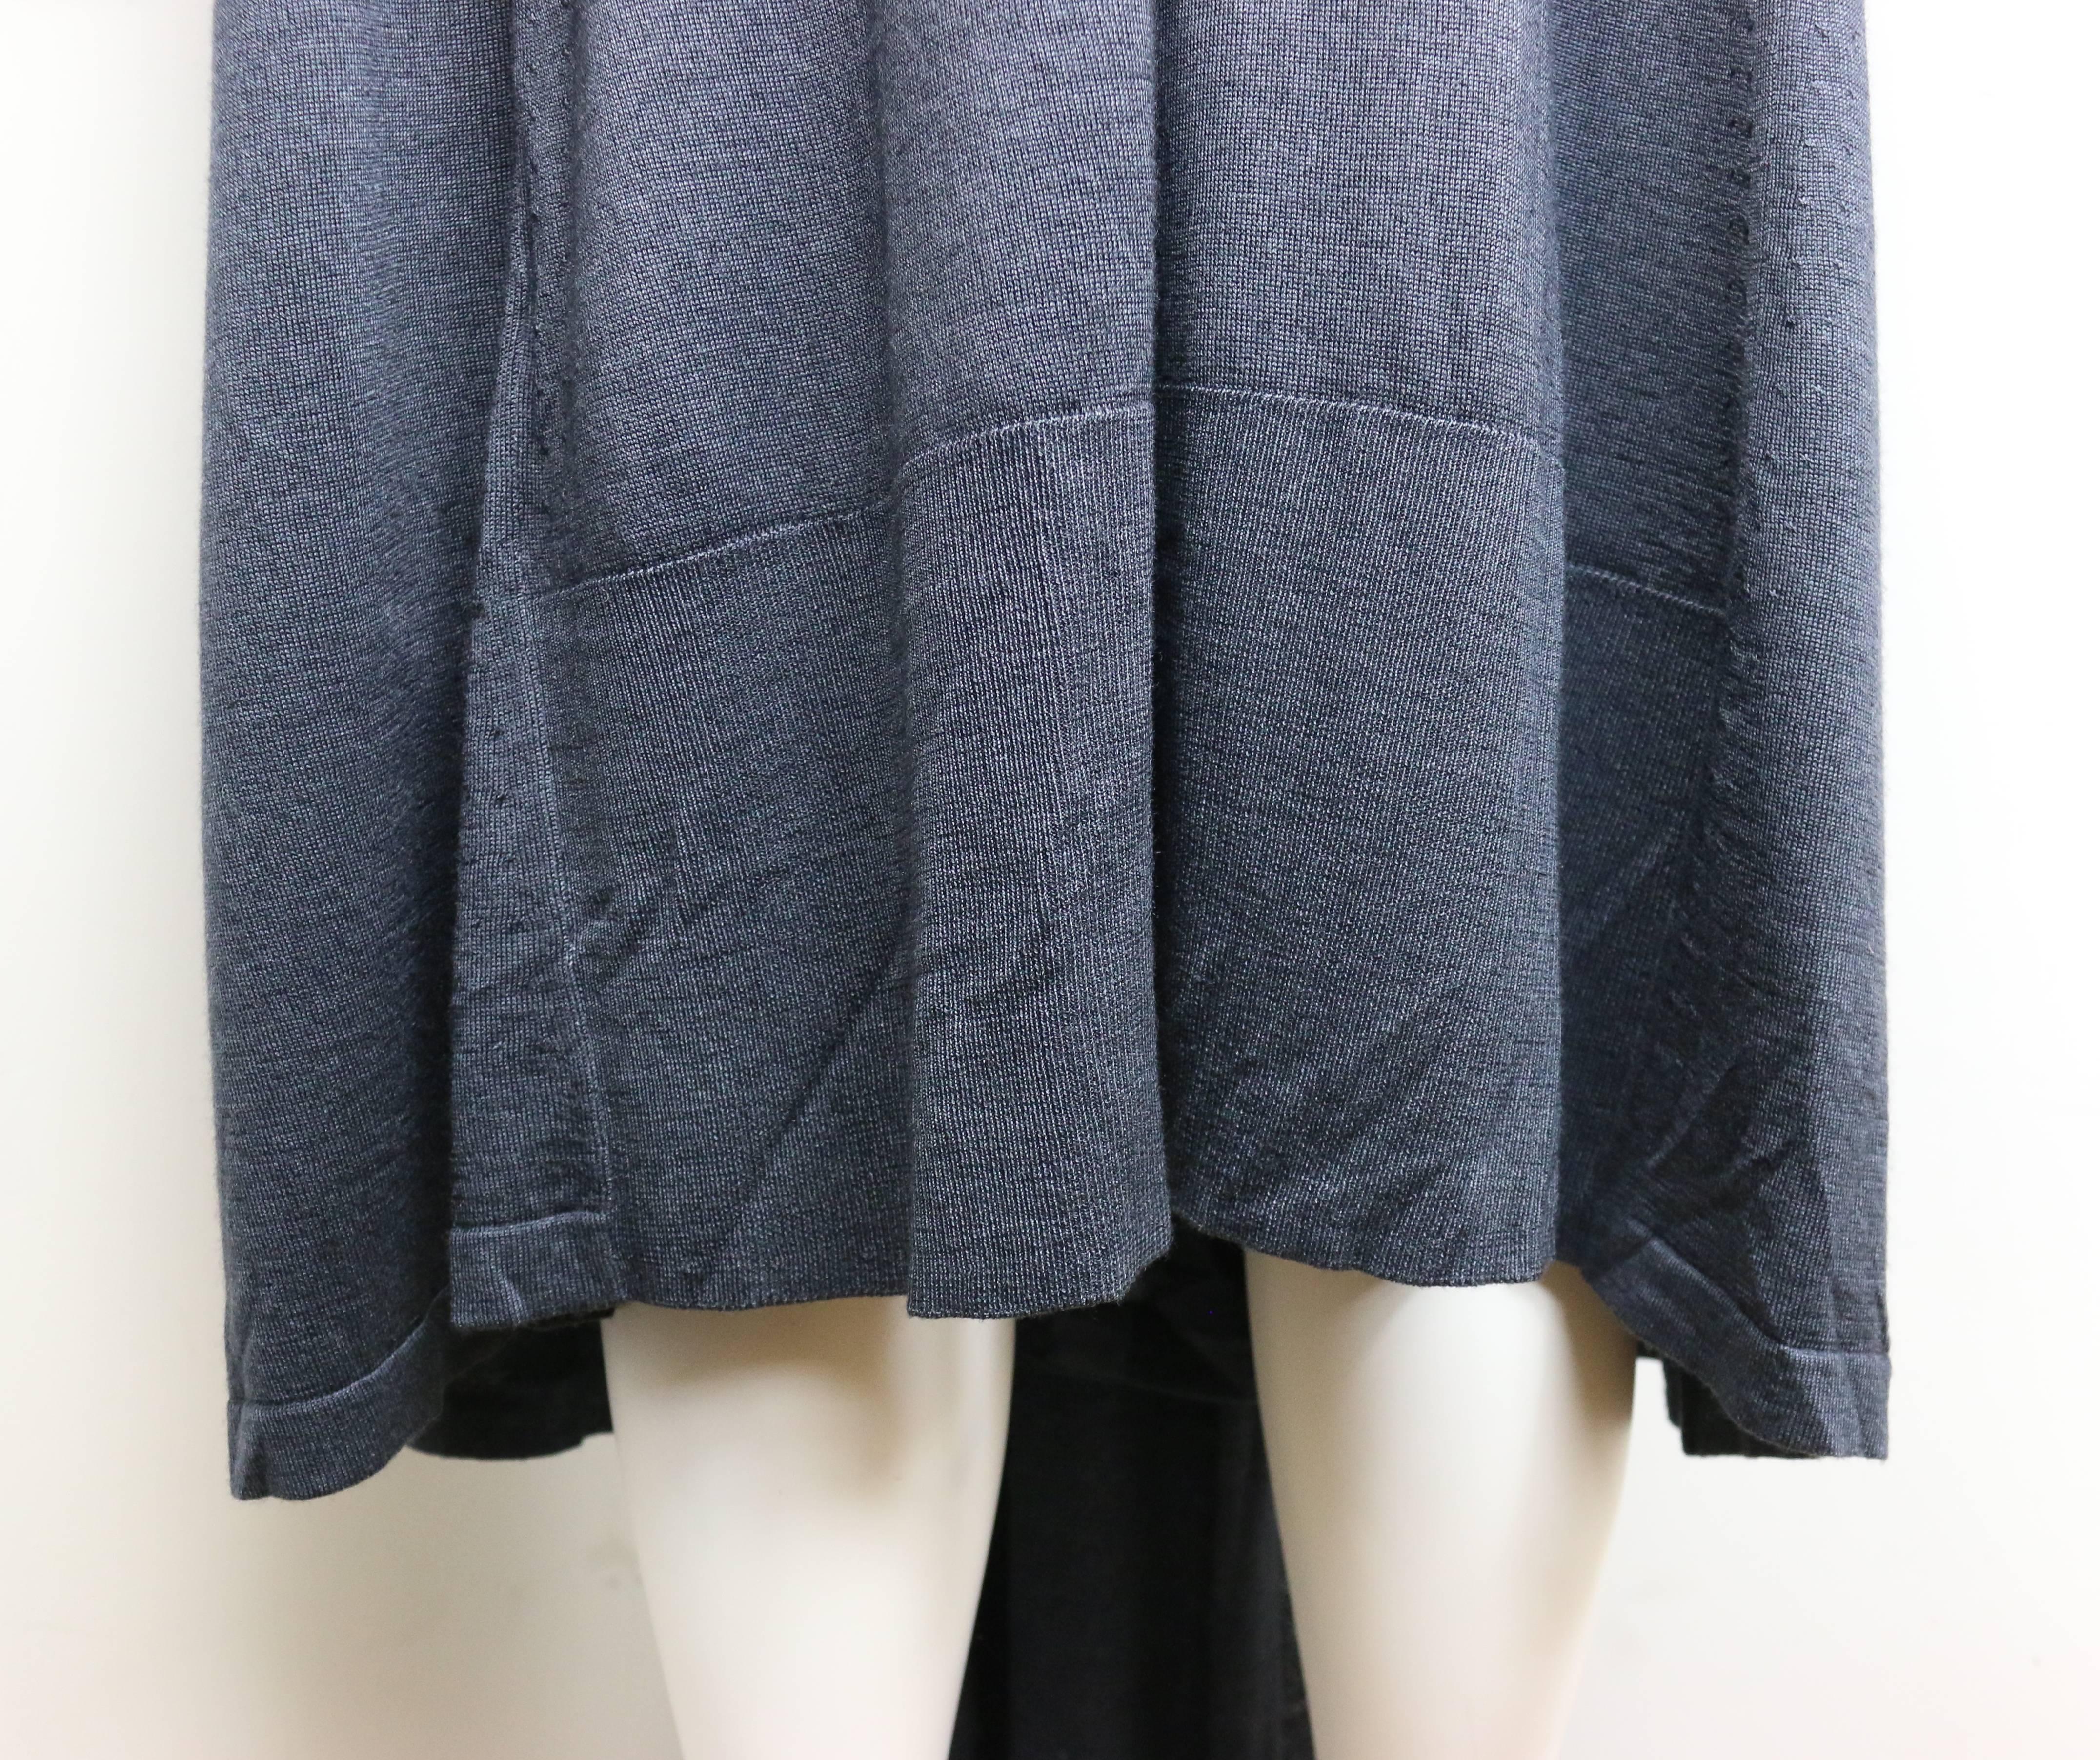 Yves Saint Laurent by Stefano Pilati Grey Wool Long Maxi Dress For Sale 2